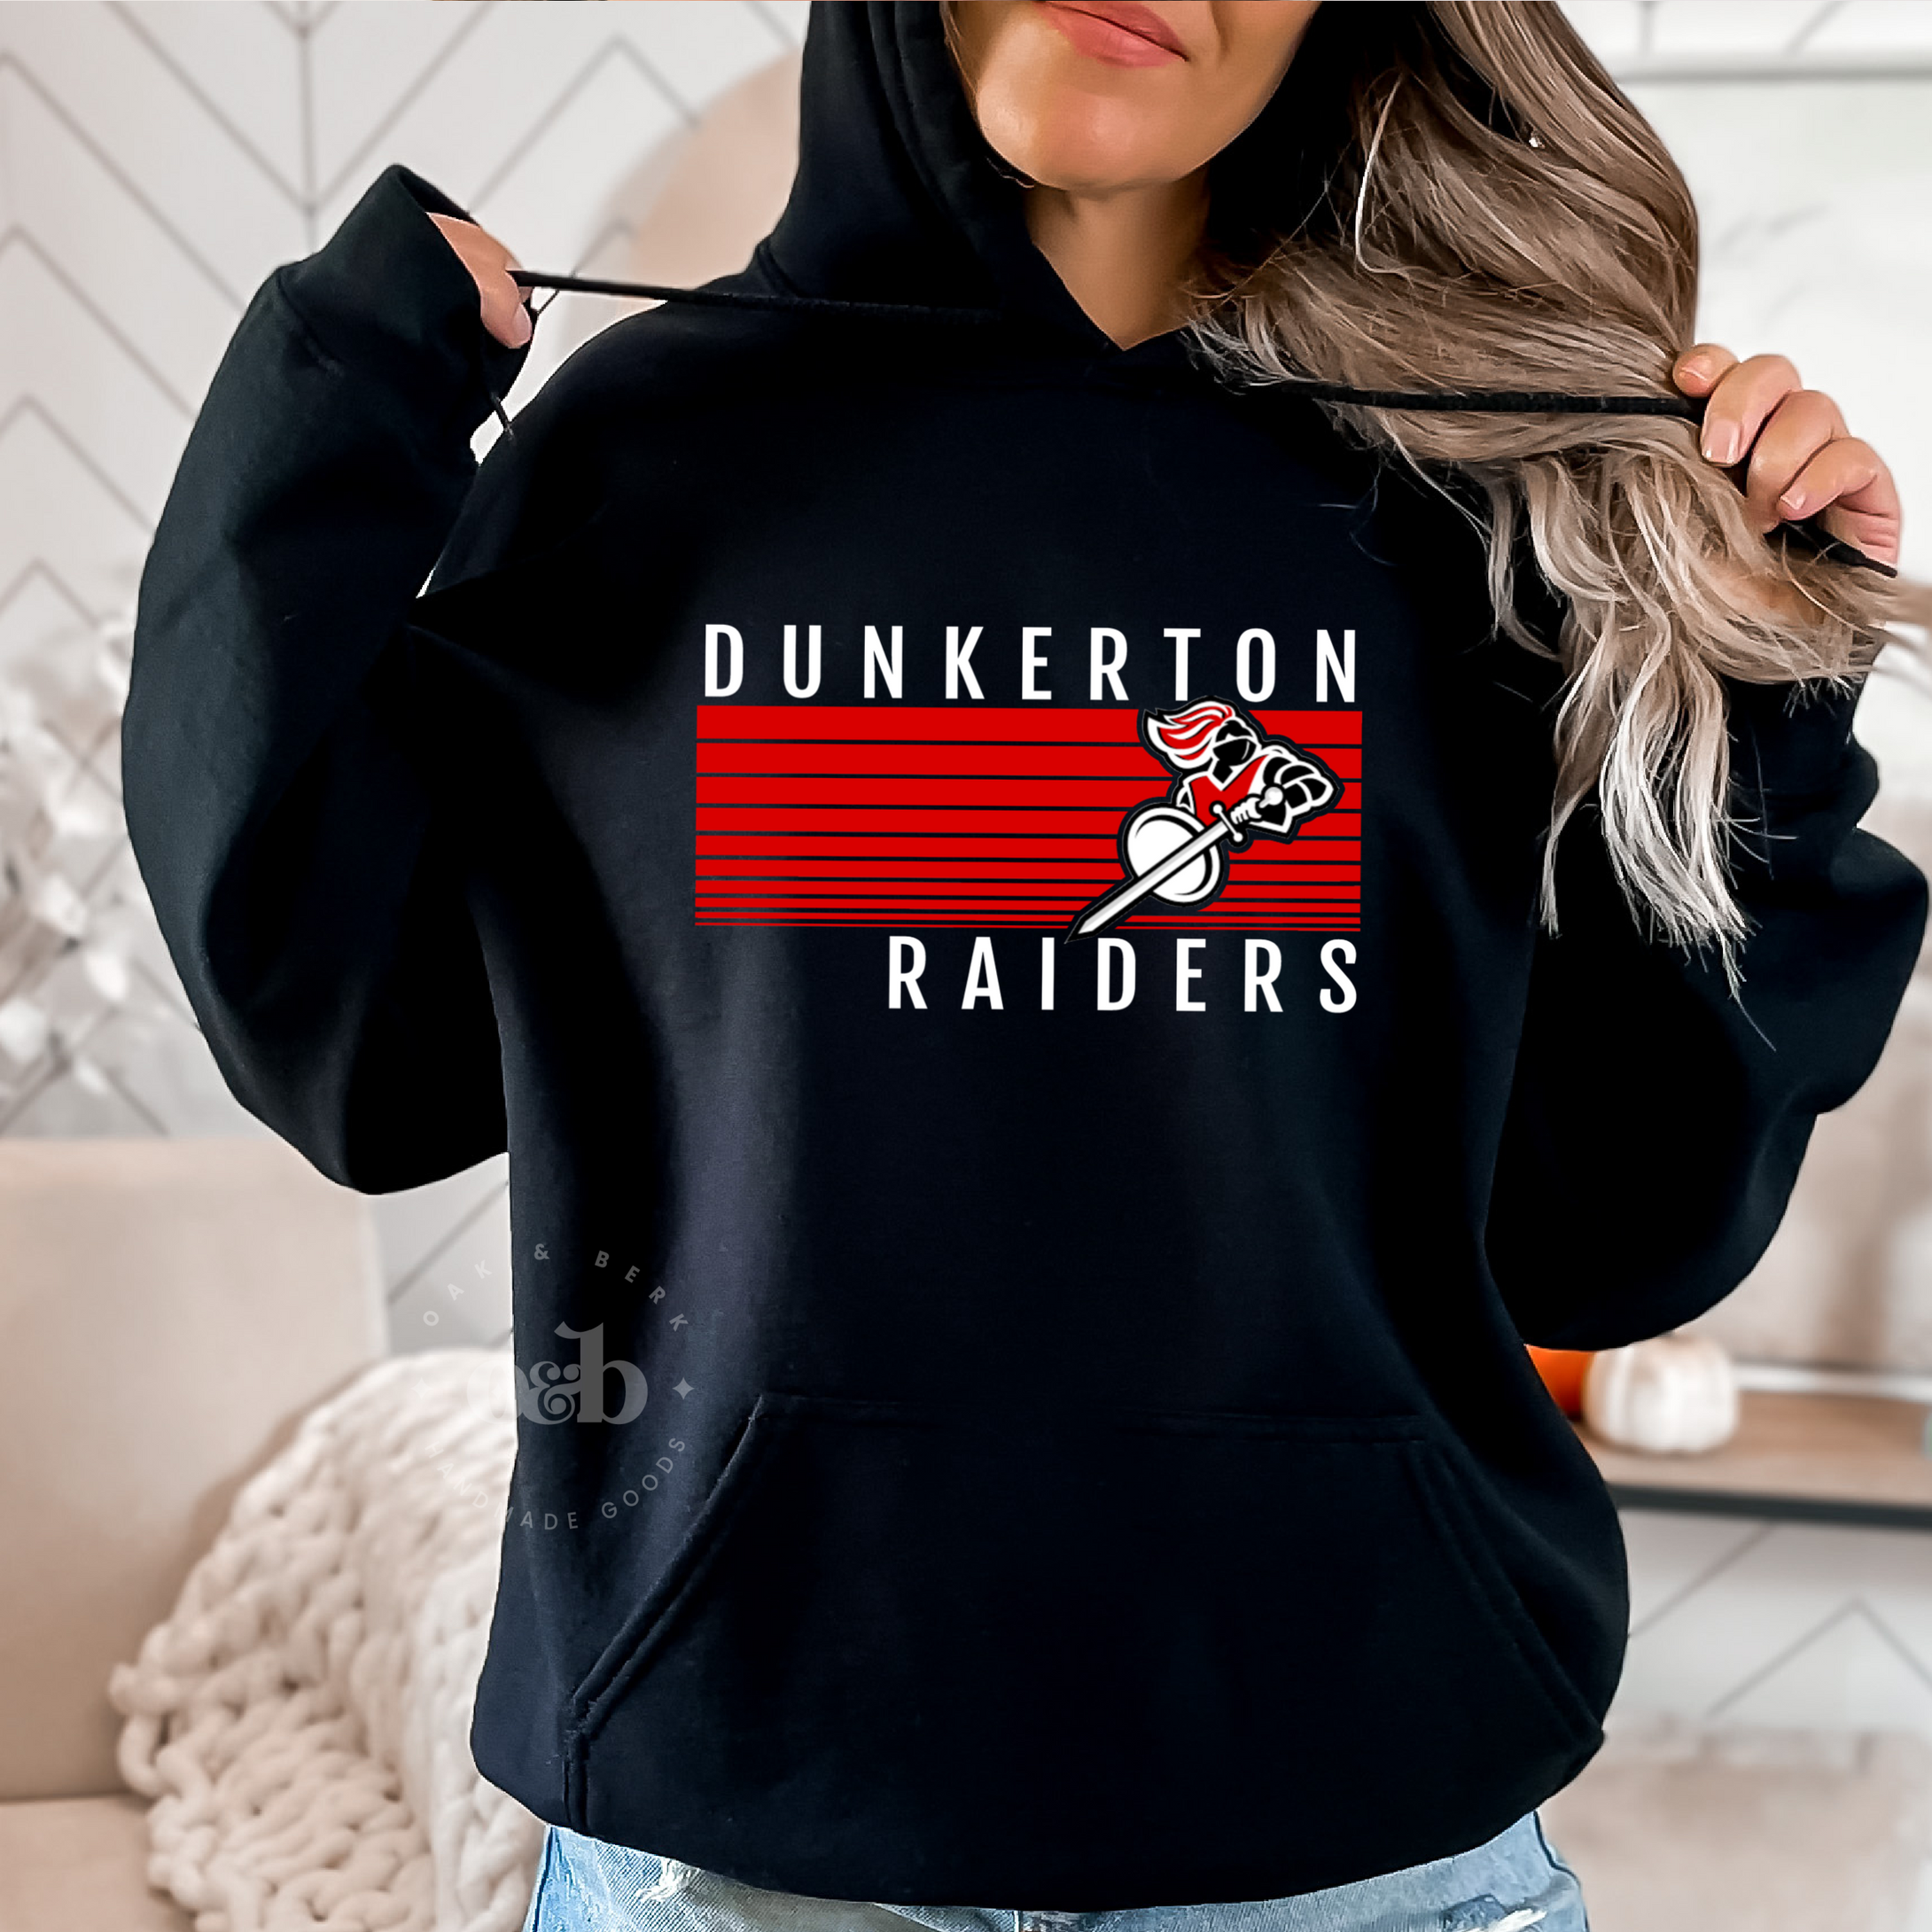 MTO / Dunkerton Raiders Retro Stripes